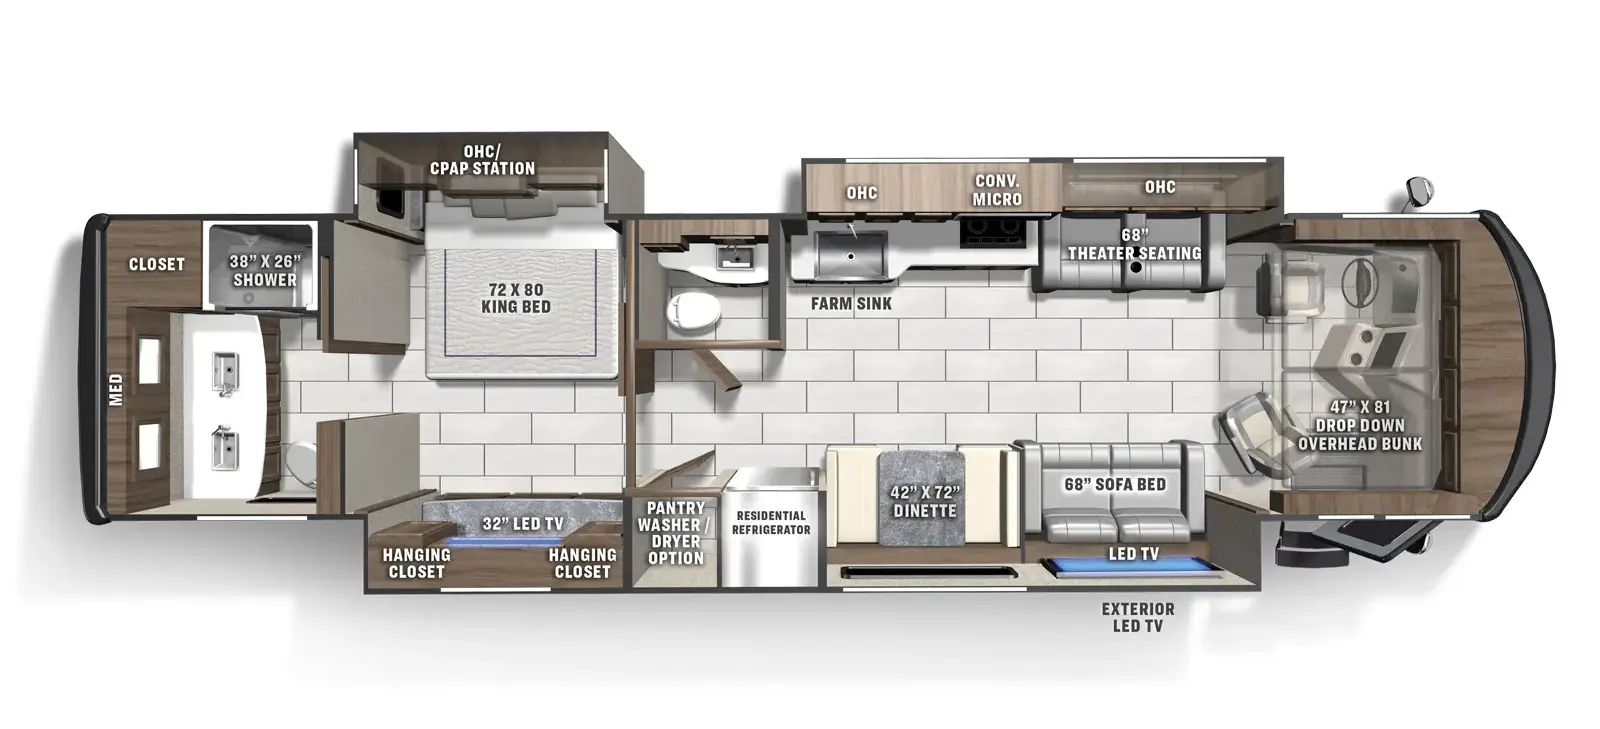 411TS Floorplan Image